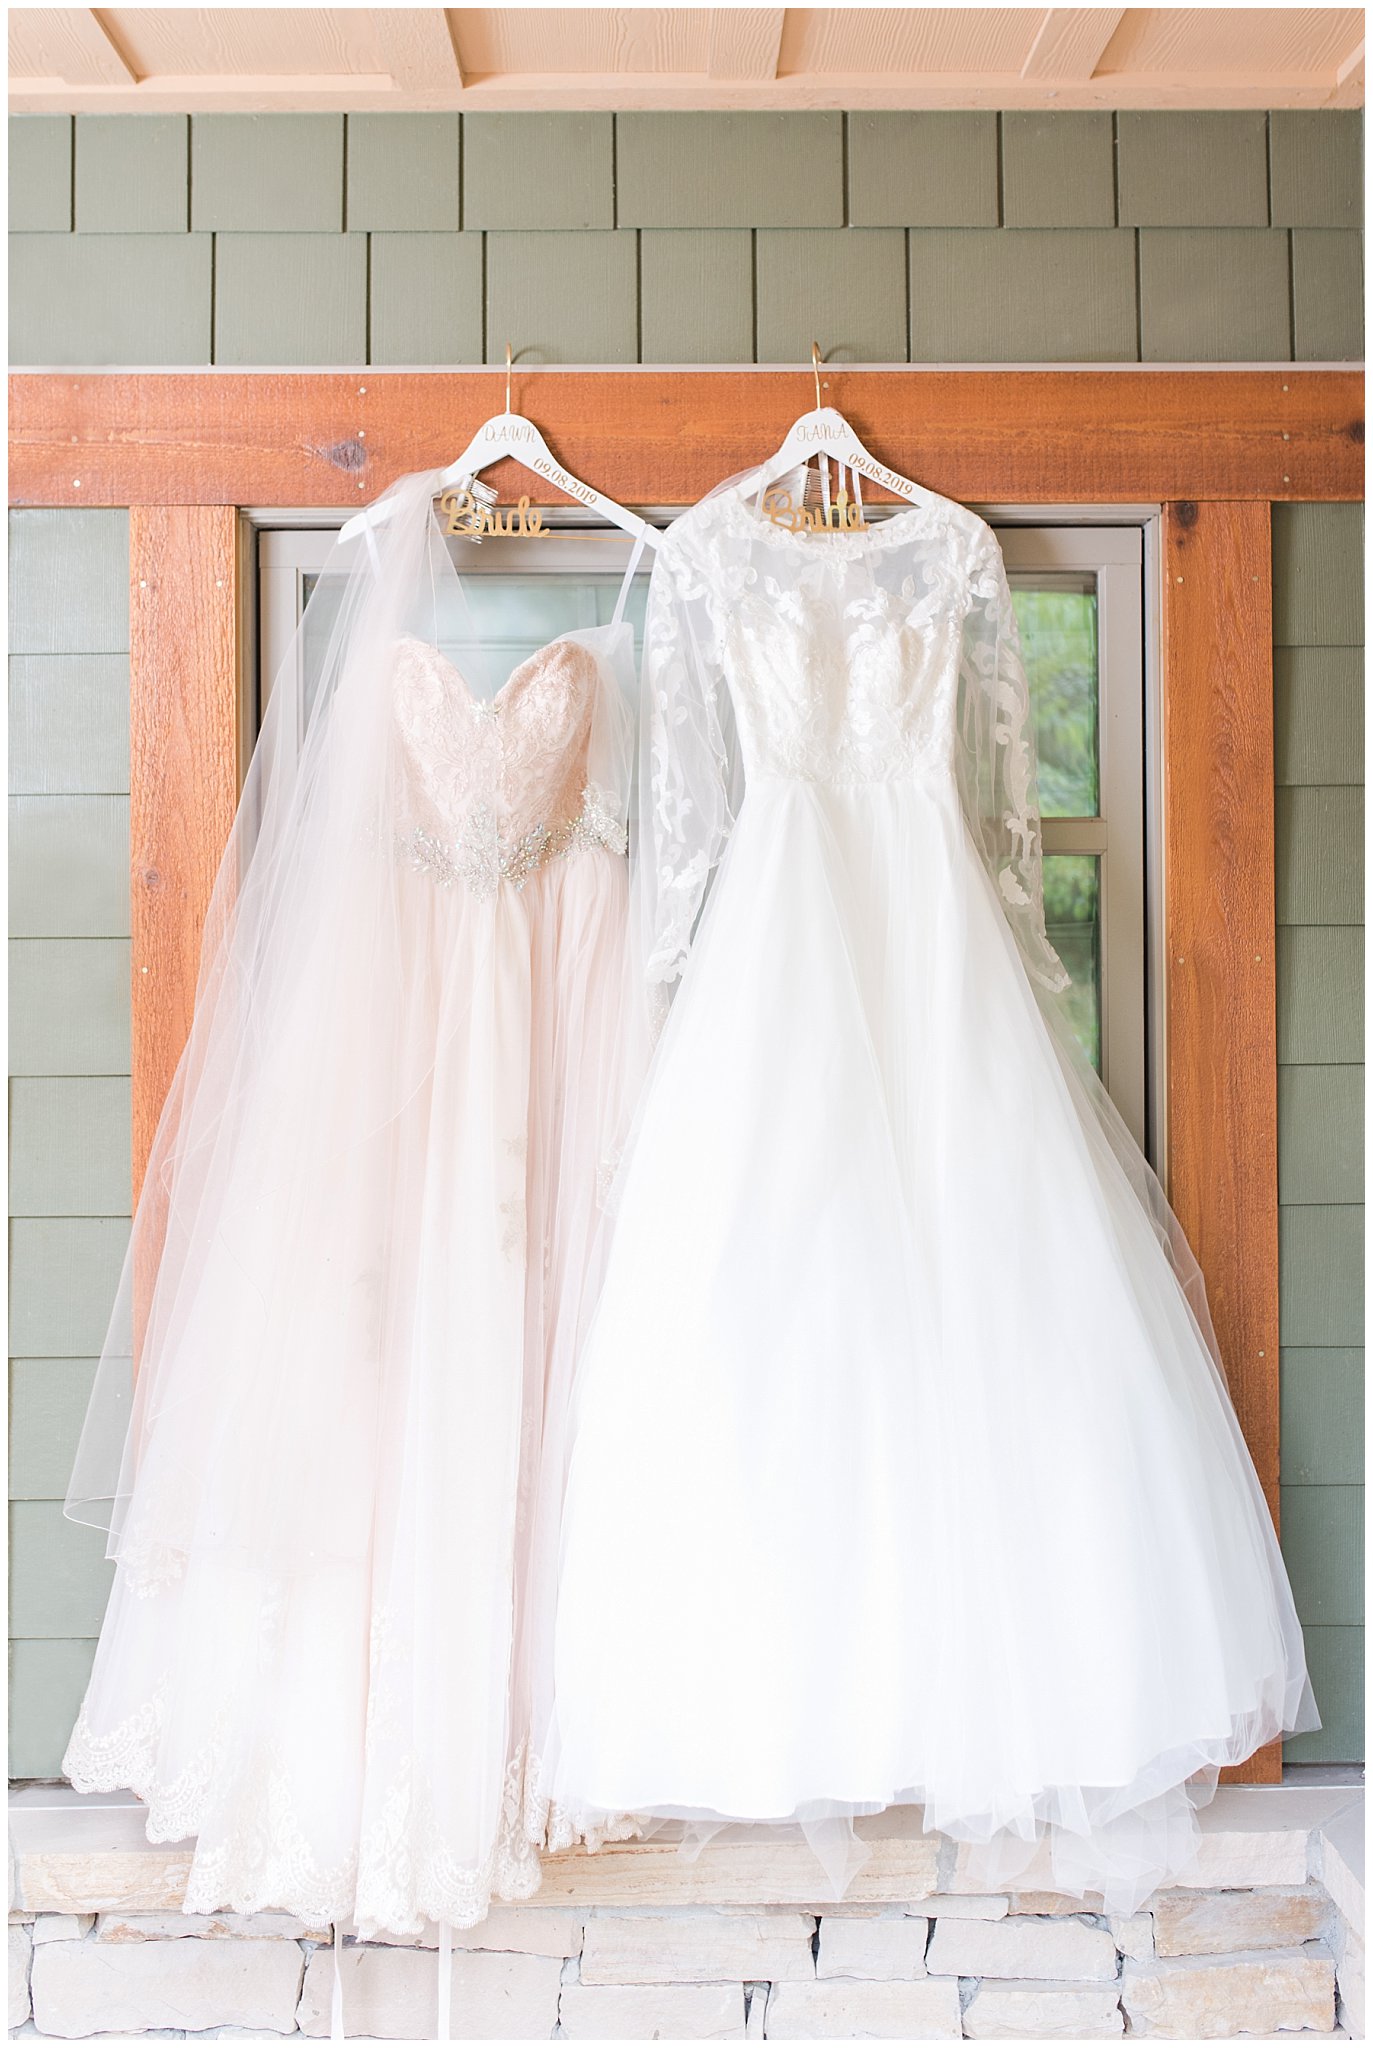 Wedding dresses hanging at the Hyatt Centric Park City | Utah Mountain Wedding Venue